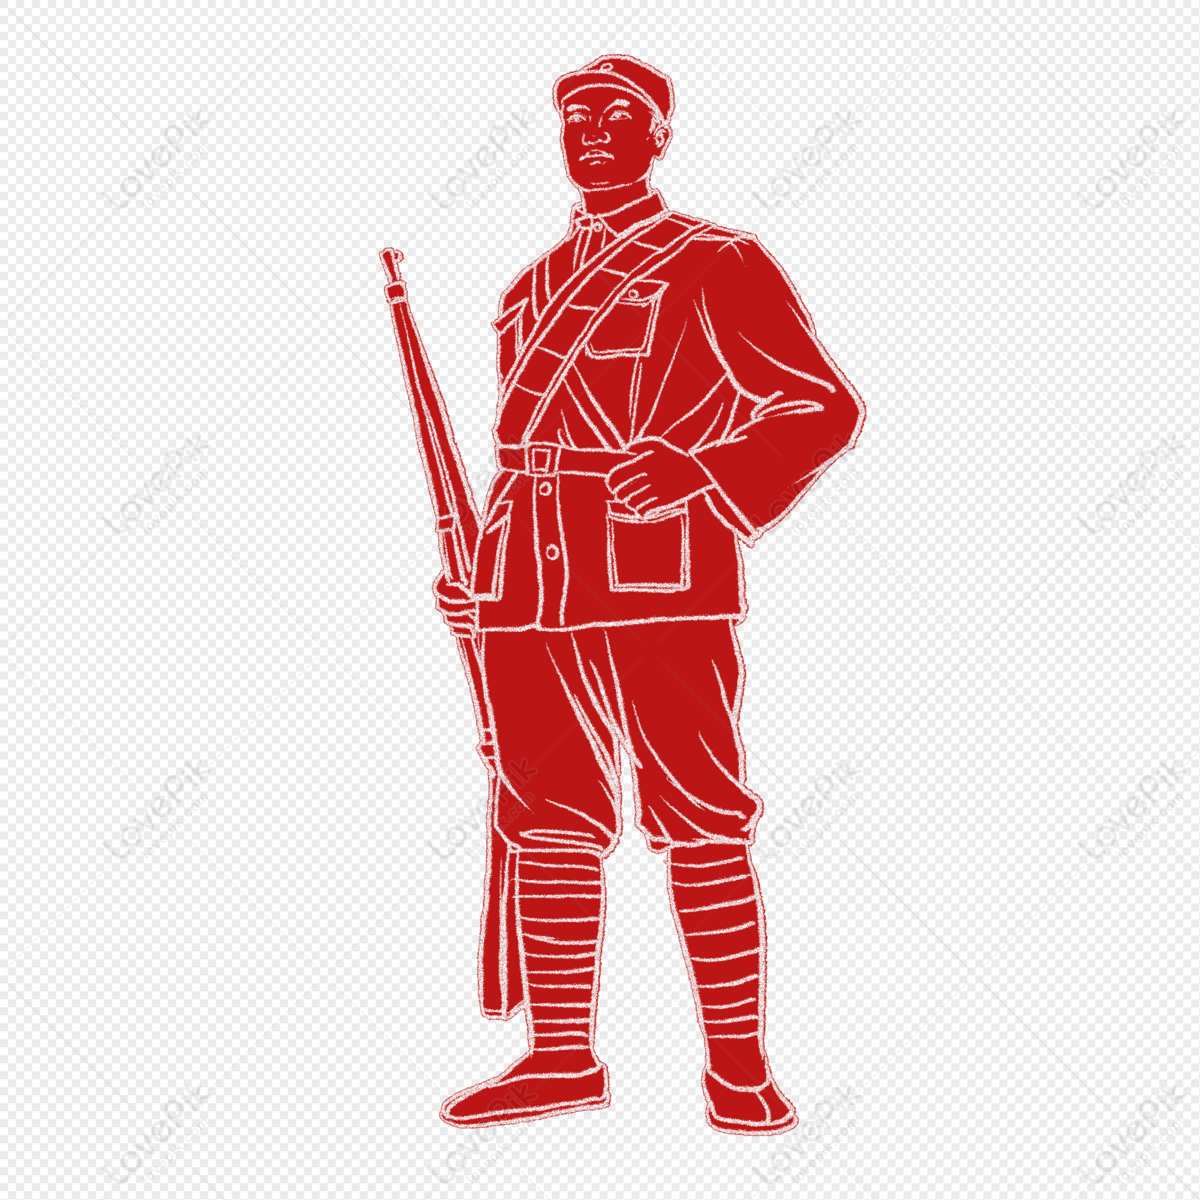 Army or Soldier Cartoon Mascot Logo Design Illustration Vector::  tasmeemME.com